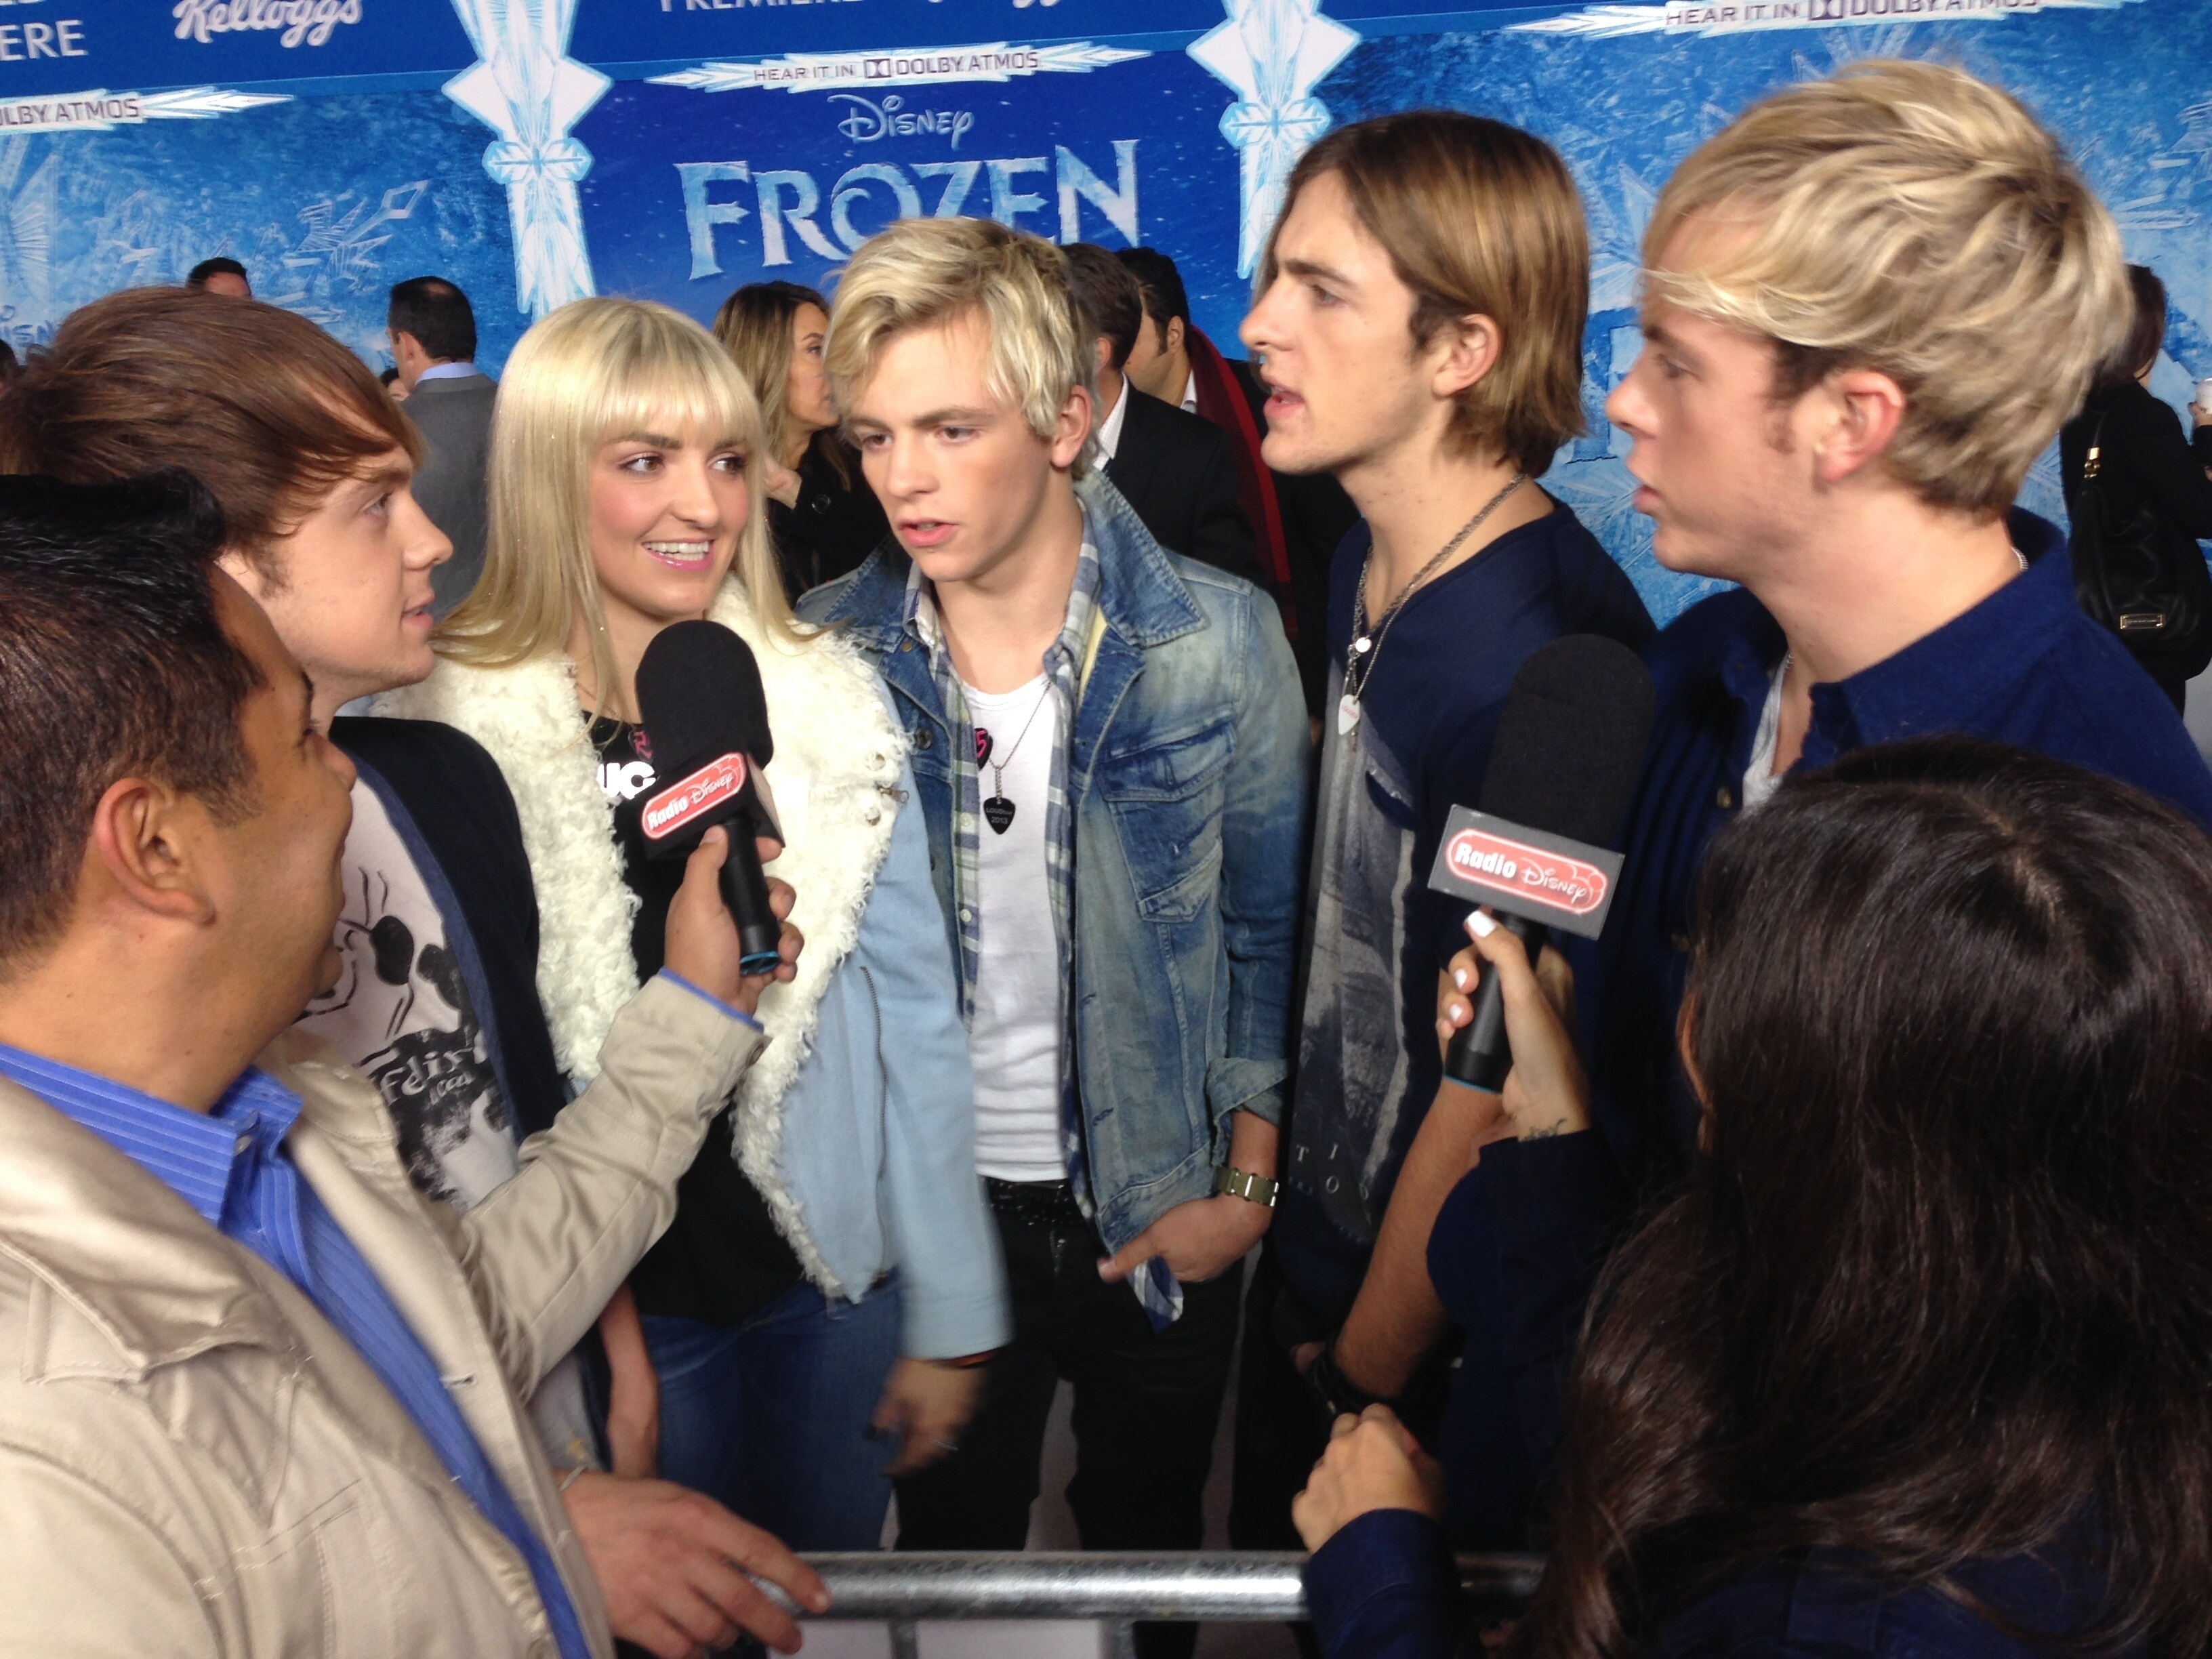 R5 at the Frozen Movie Premiere